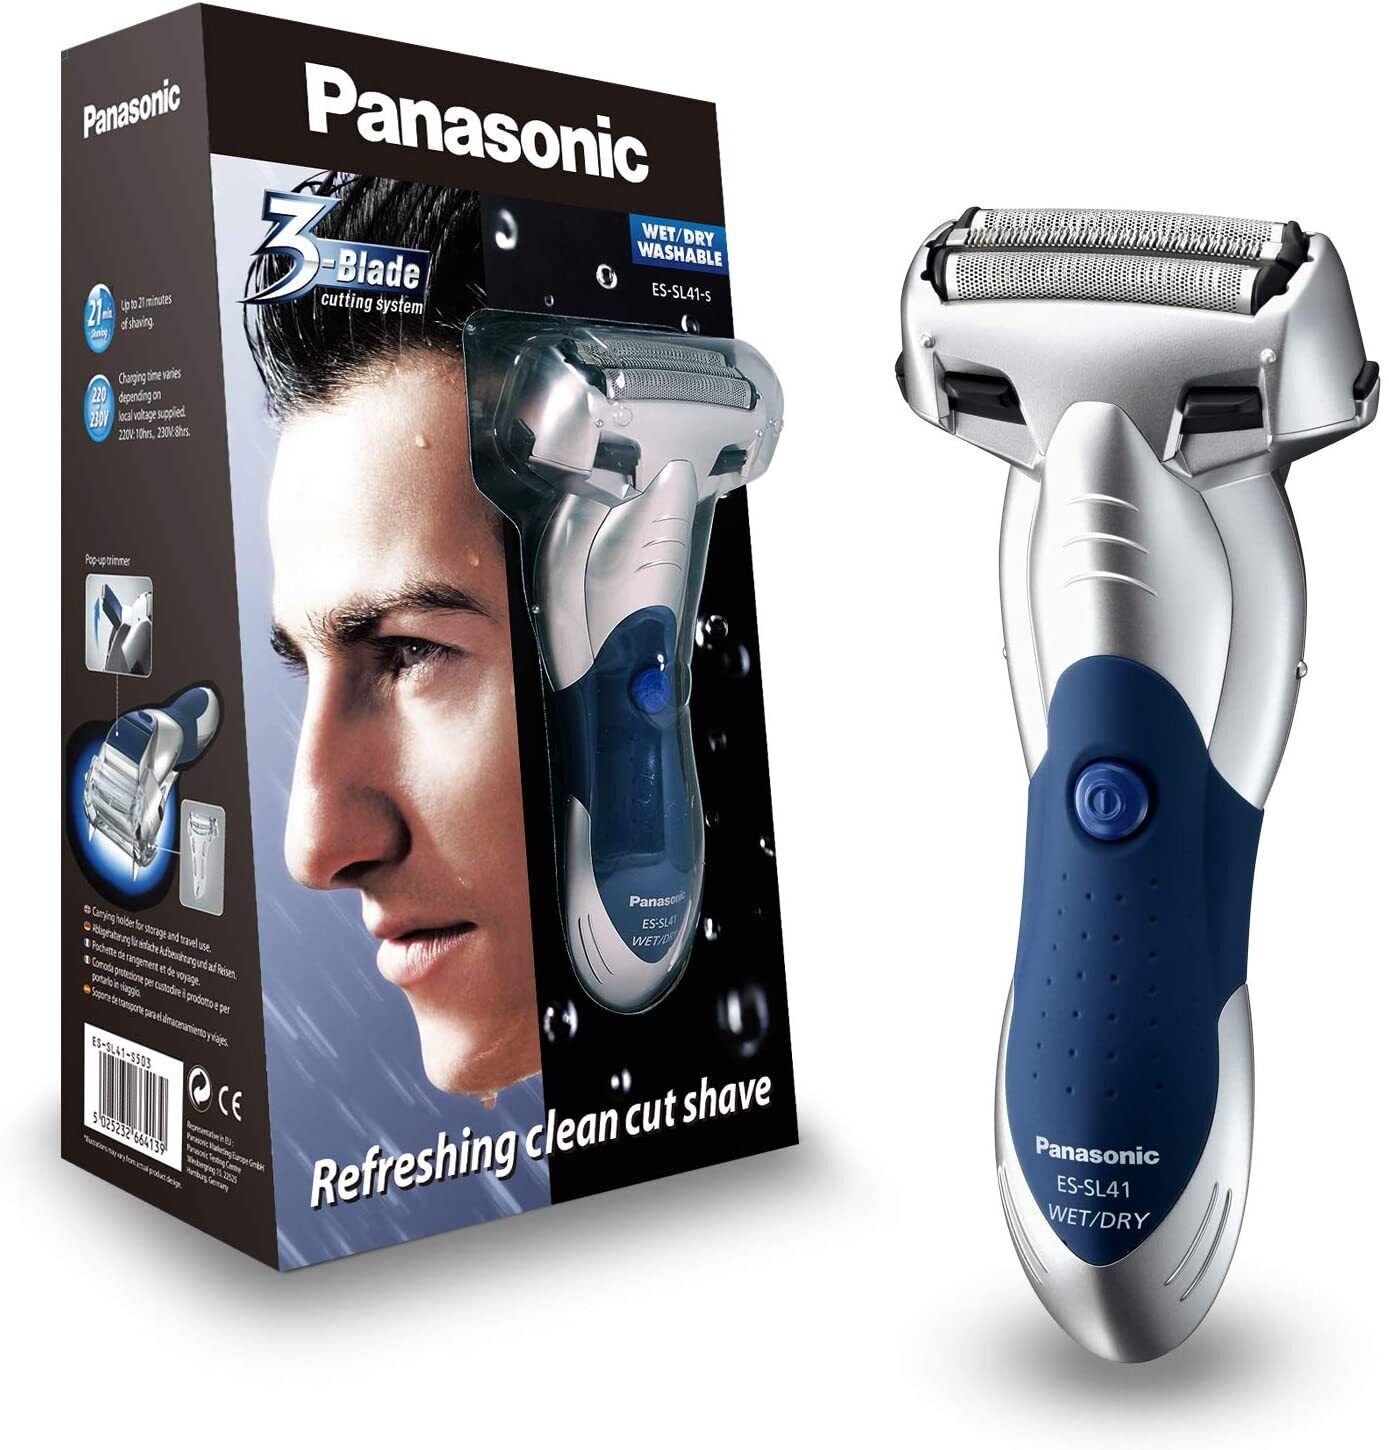 Panasonic Smart Shaver: Wet/Dry, 3 Blades, Cordless